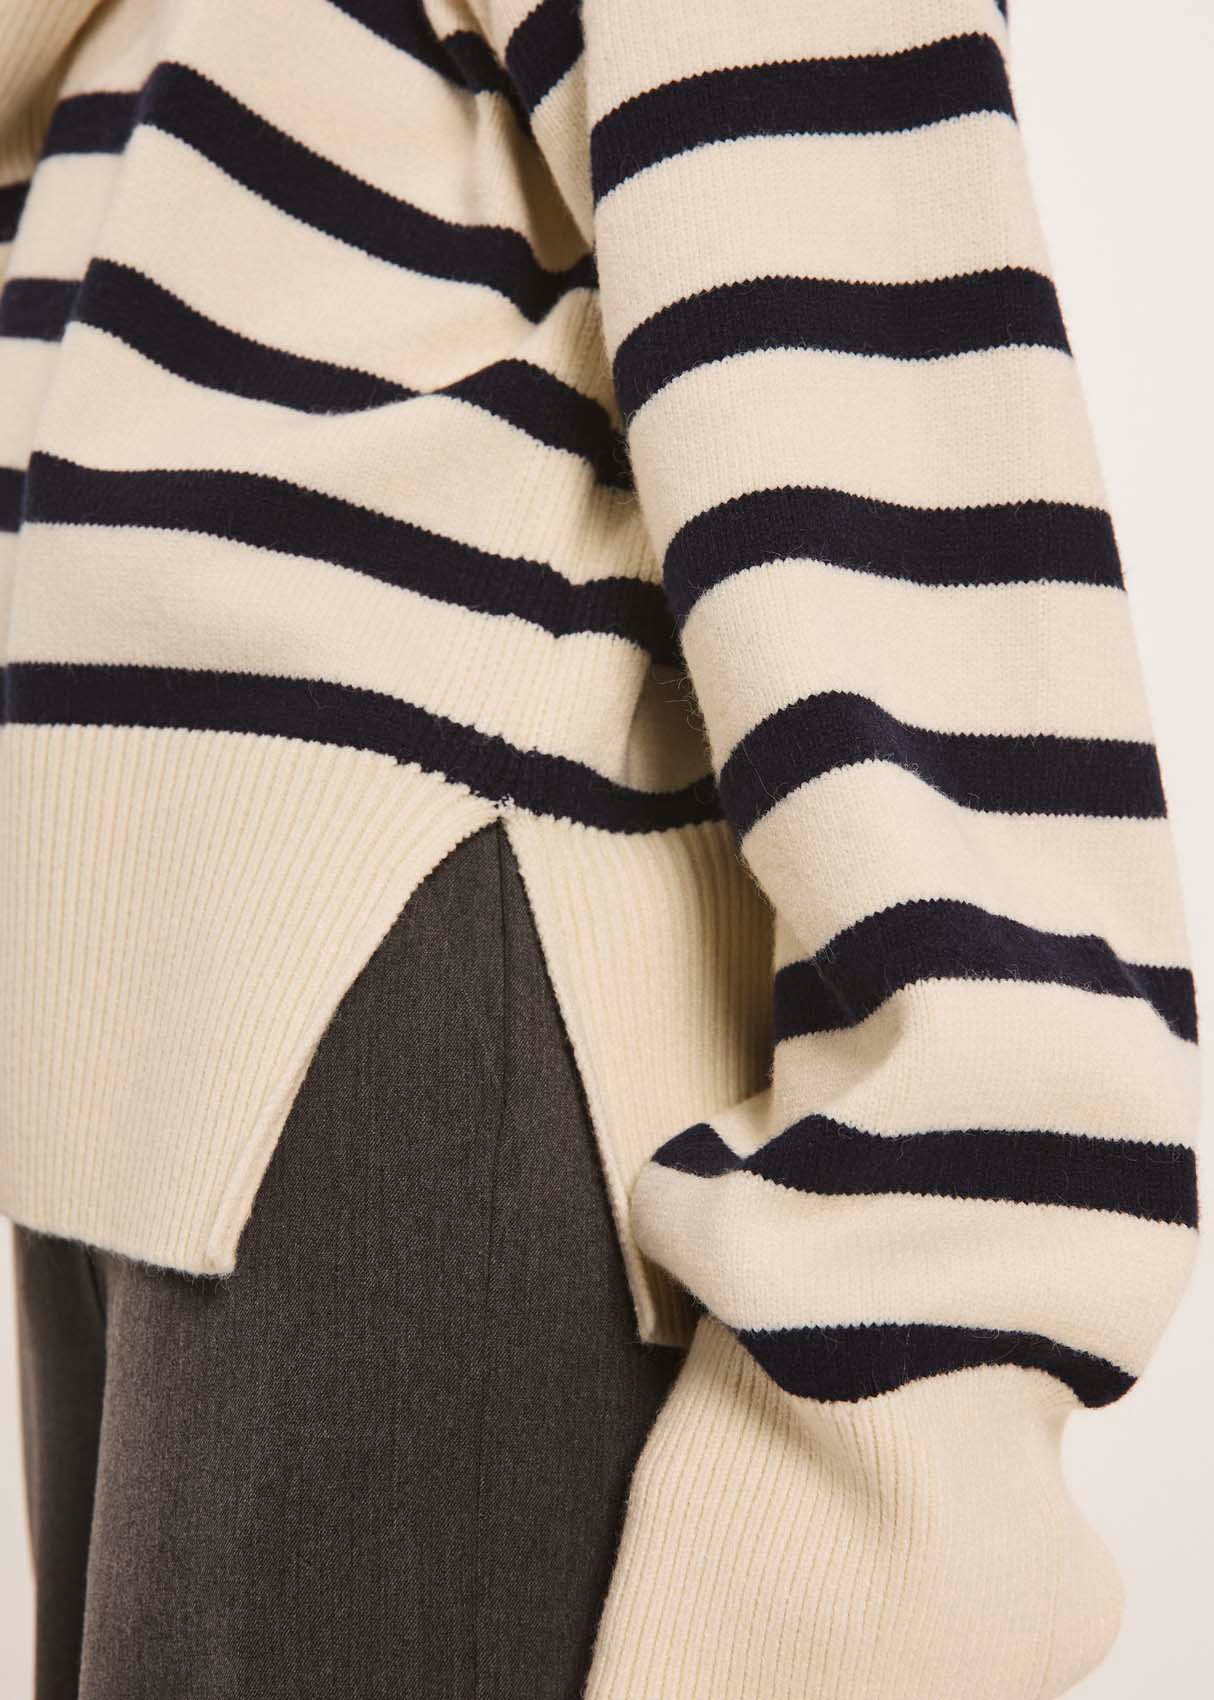 Norr  Lindsay new knit stripe top / women